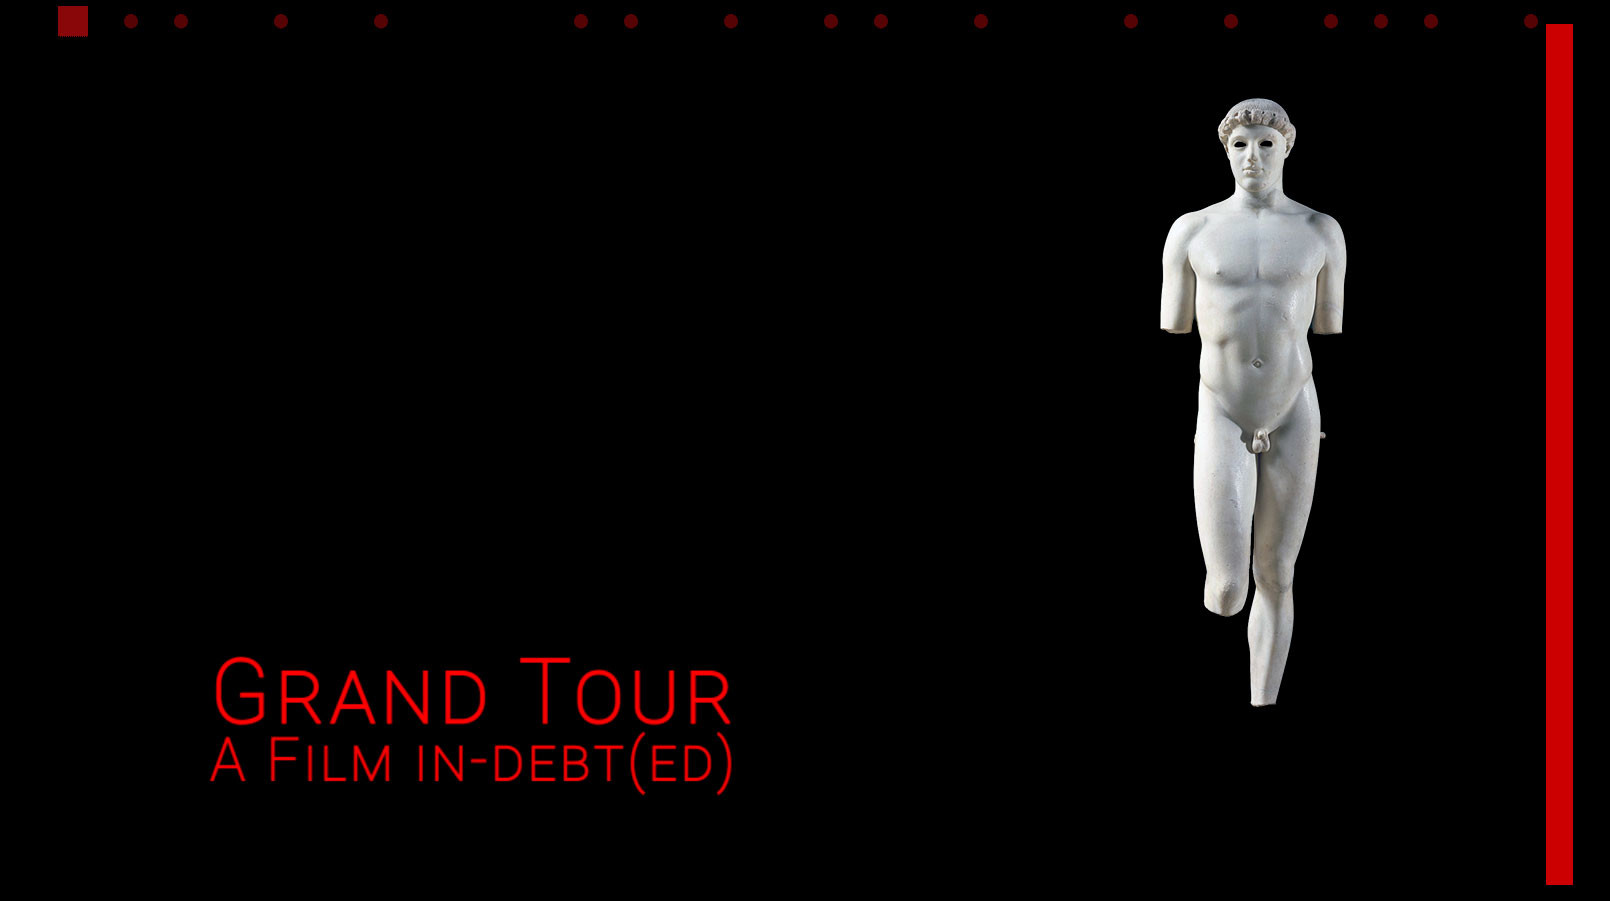 The Grand Tour - A film In-Debt(ed)